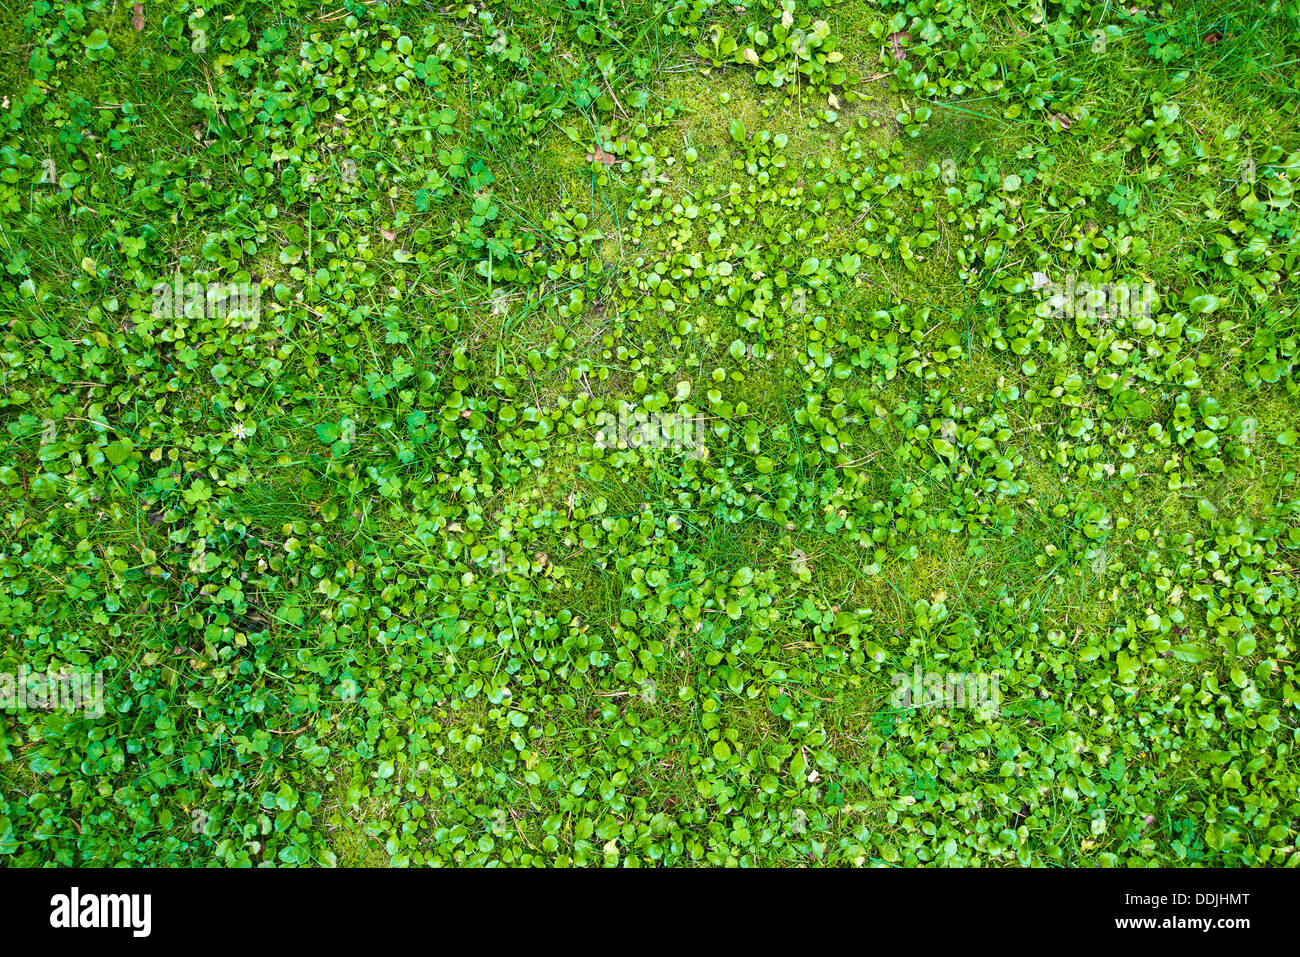 üppigen grünen Rasen Hintergrundtextur Stockfoto